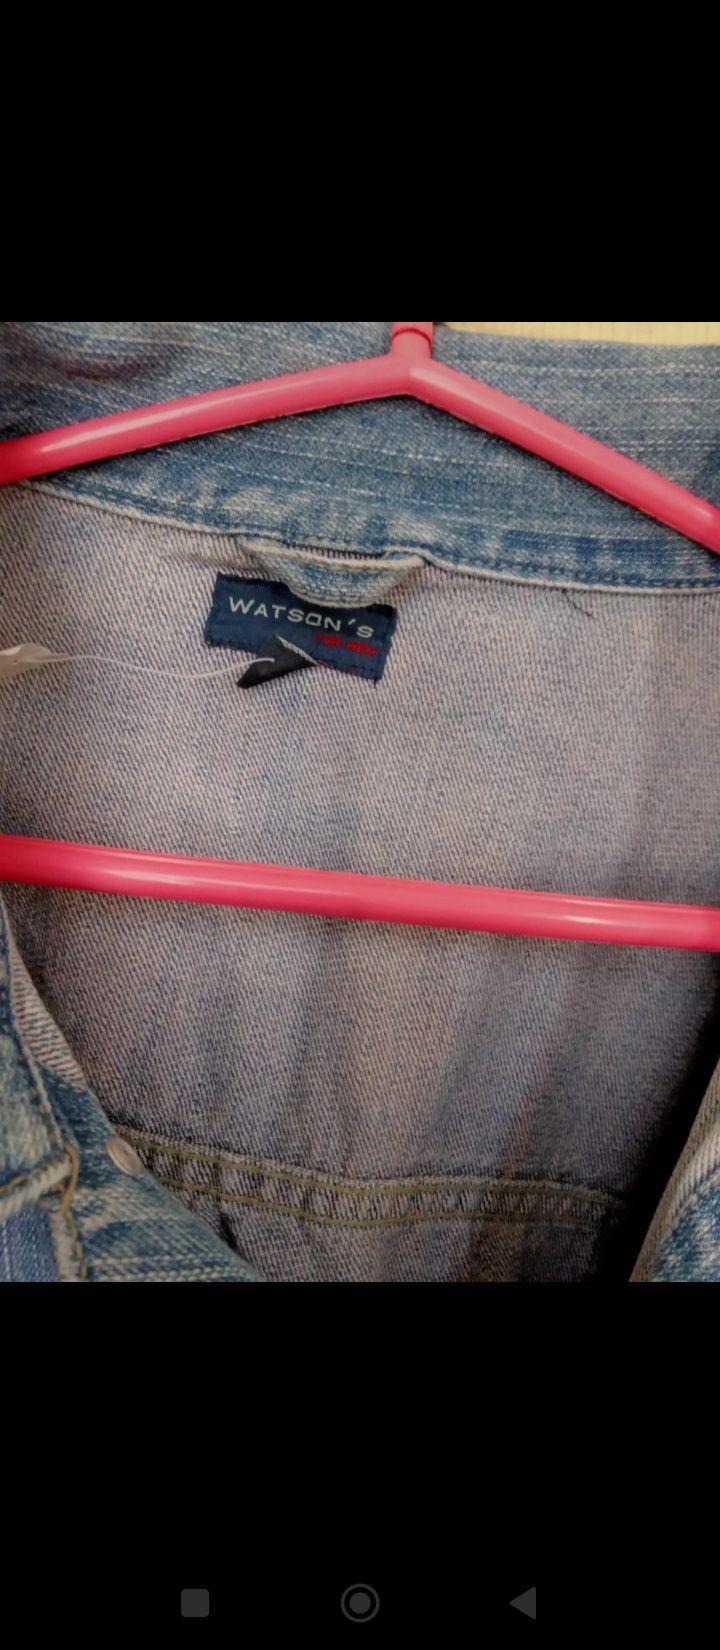 Kurtka jeans Watson's